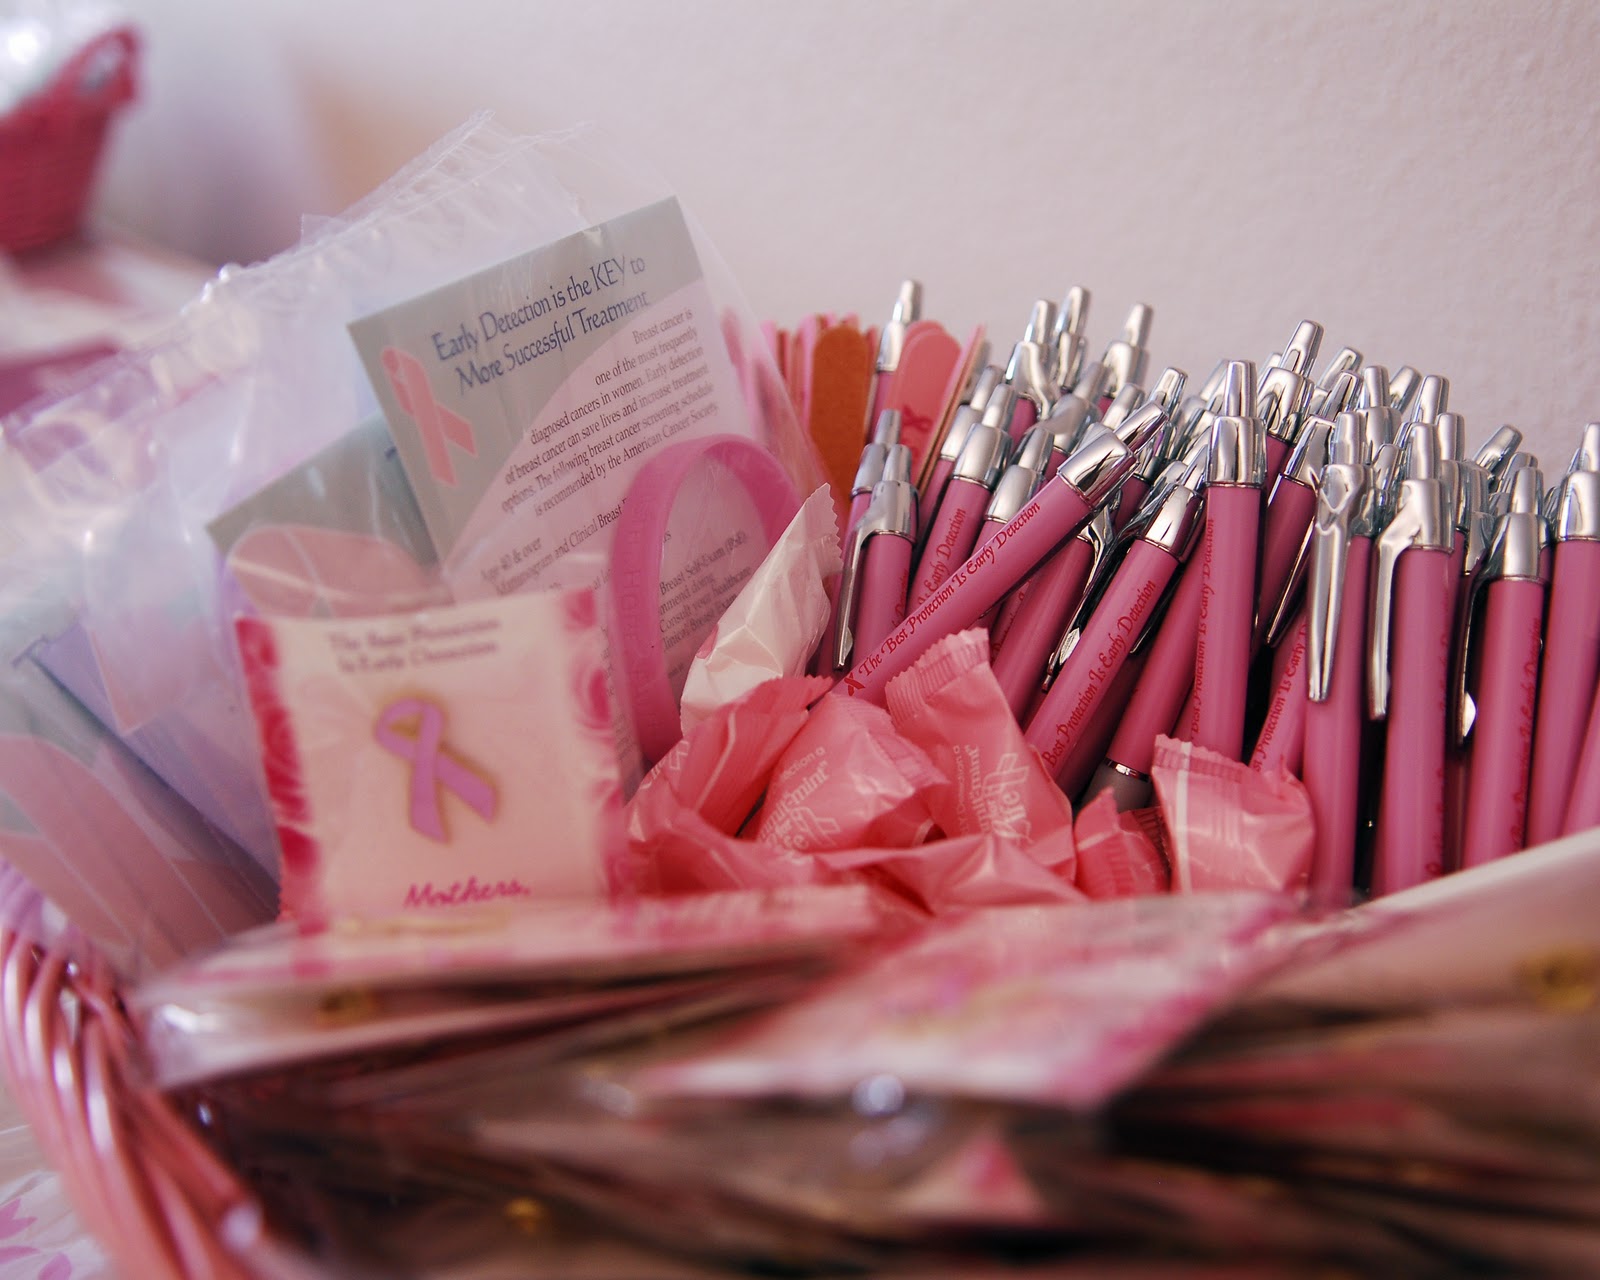 http://2.bp.blogspot.com/-sNPOjvmhBEM/TpNMqZV1H_I/AAAAAAAAAVY/emmD48Mqwlg/s1600/Breast_cancer_awareness_ribbons_and_pens.jpg